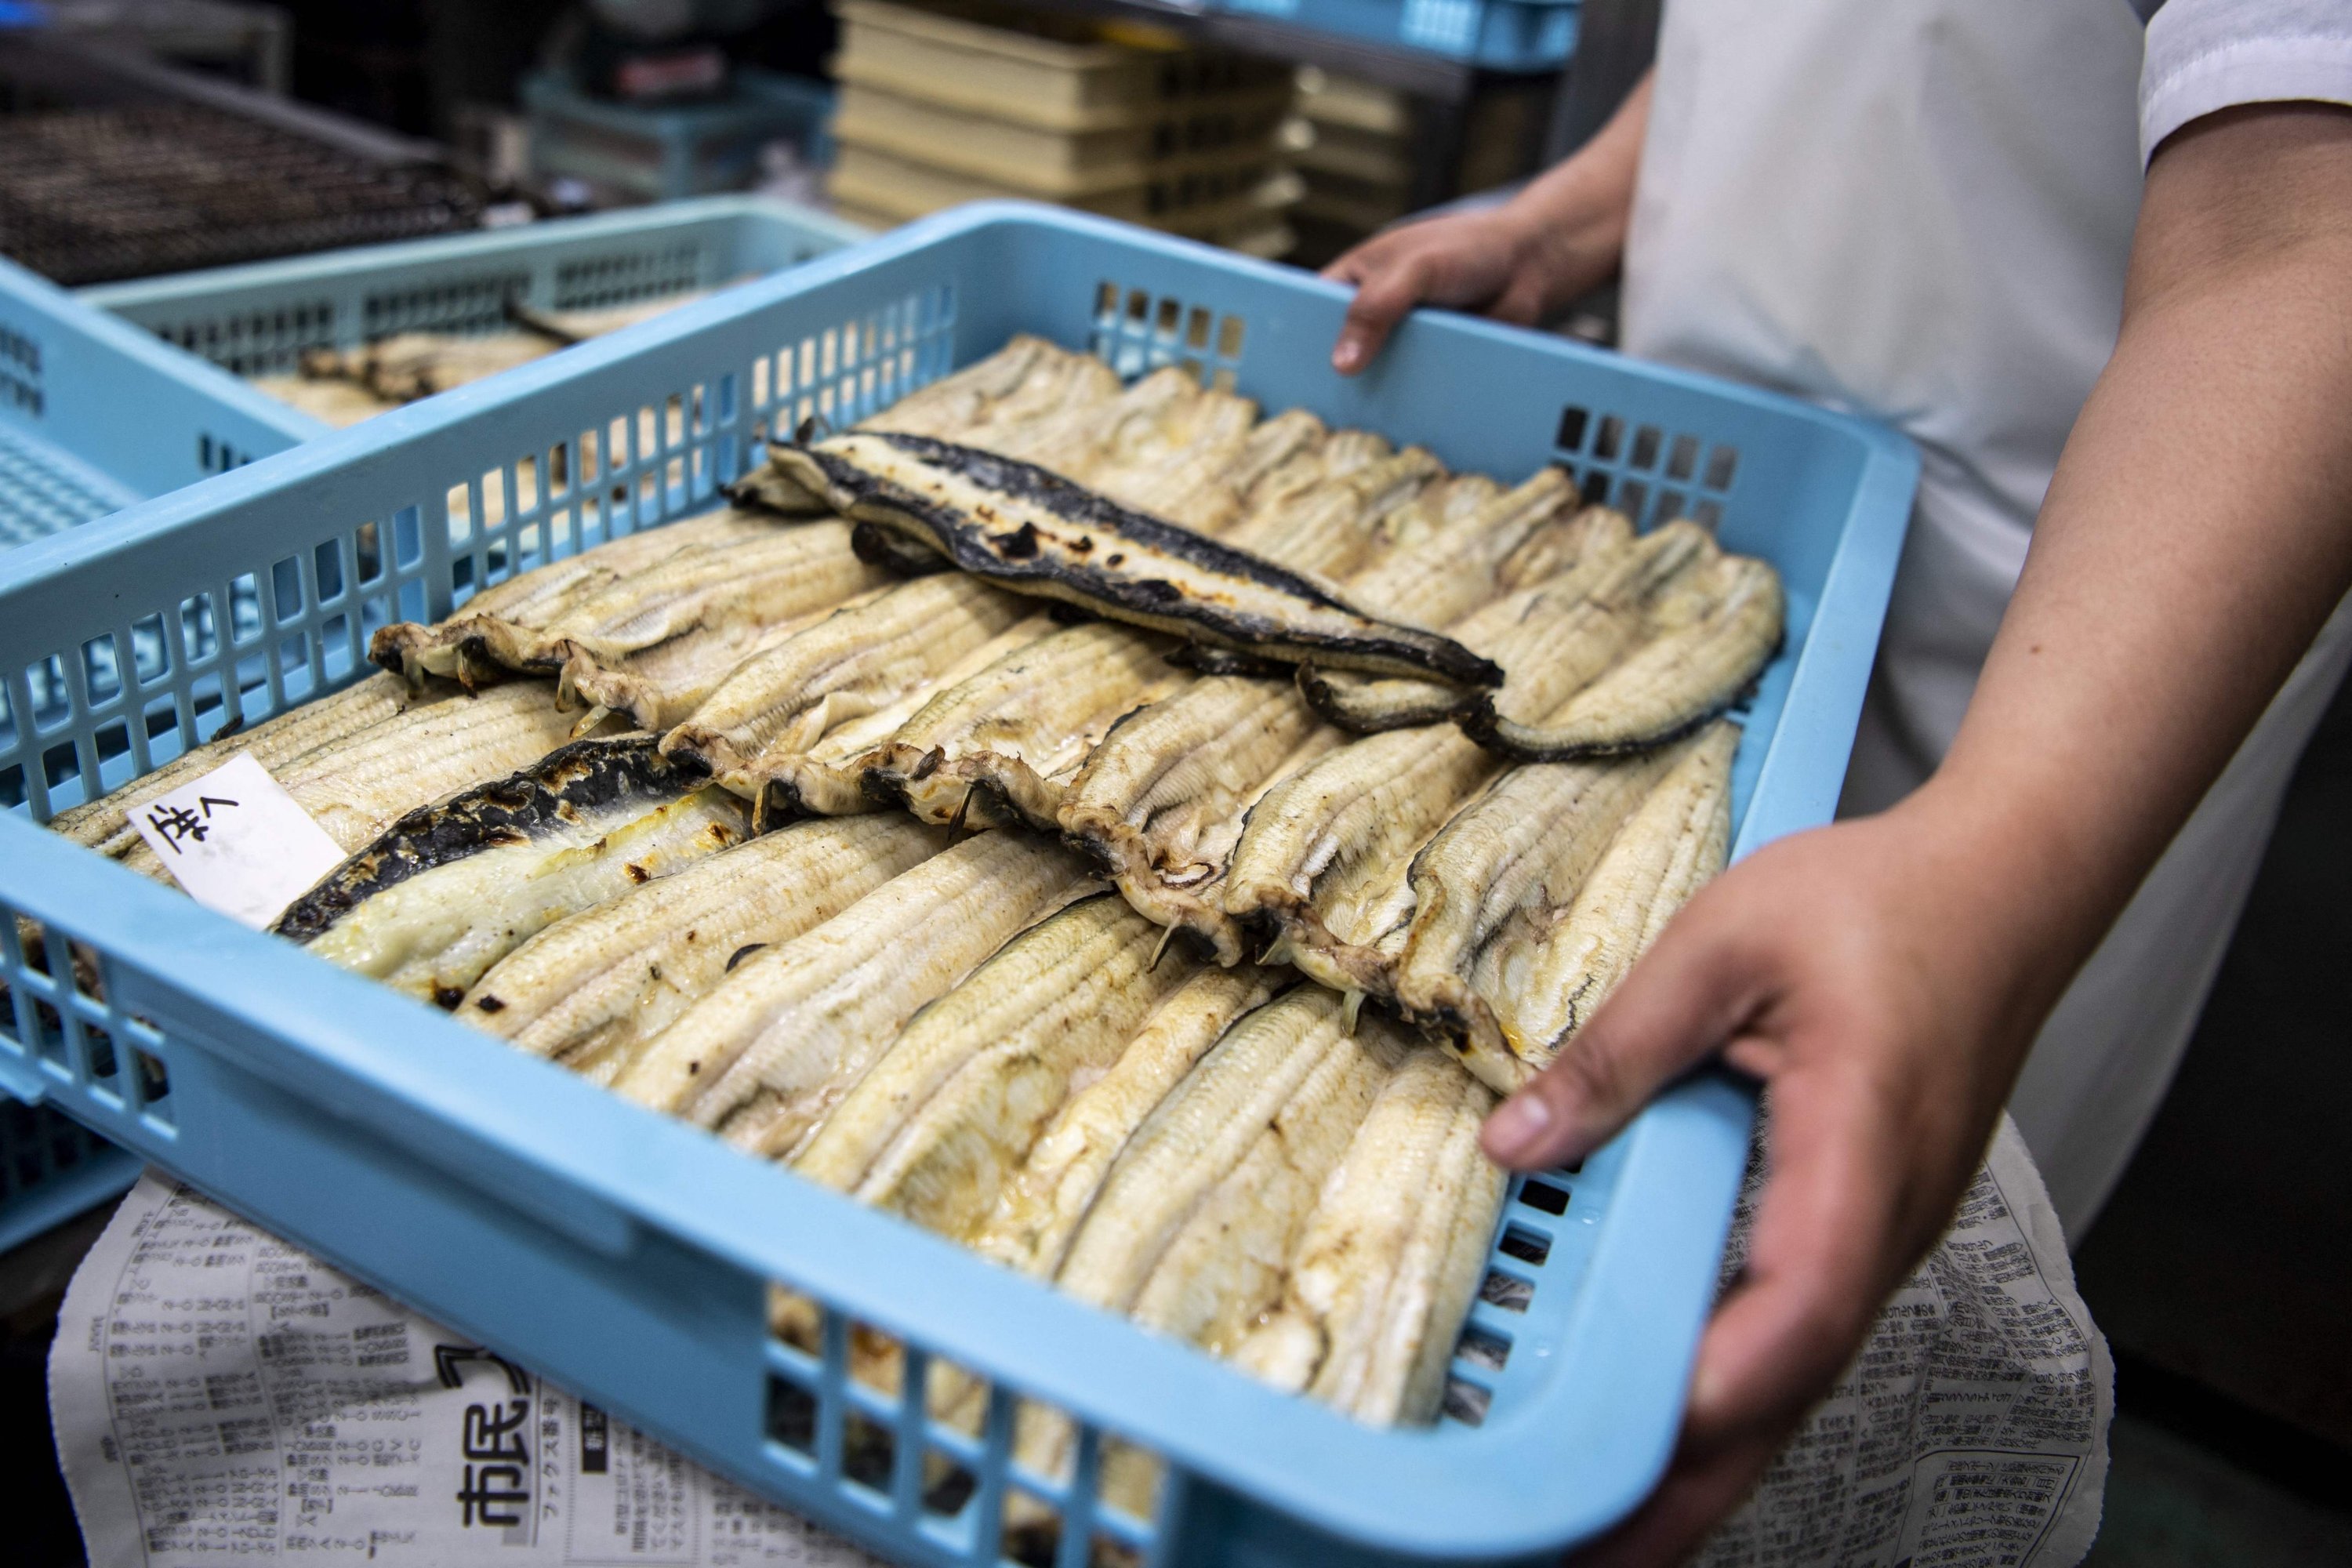 A seafood wholesaler employee handles grilled eel fillets in Hamamatsu, Shizuoka prefecture, Japan, April 17, 2021. (AFP Photo)